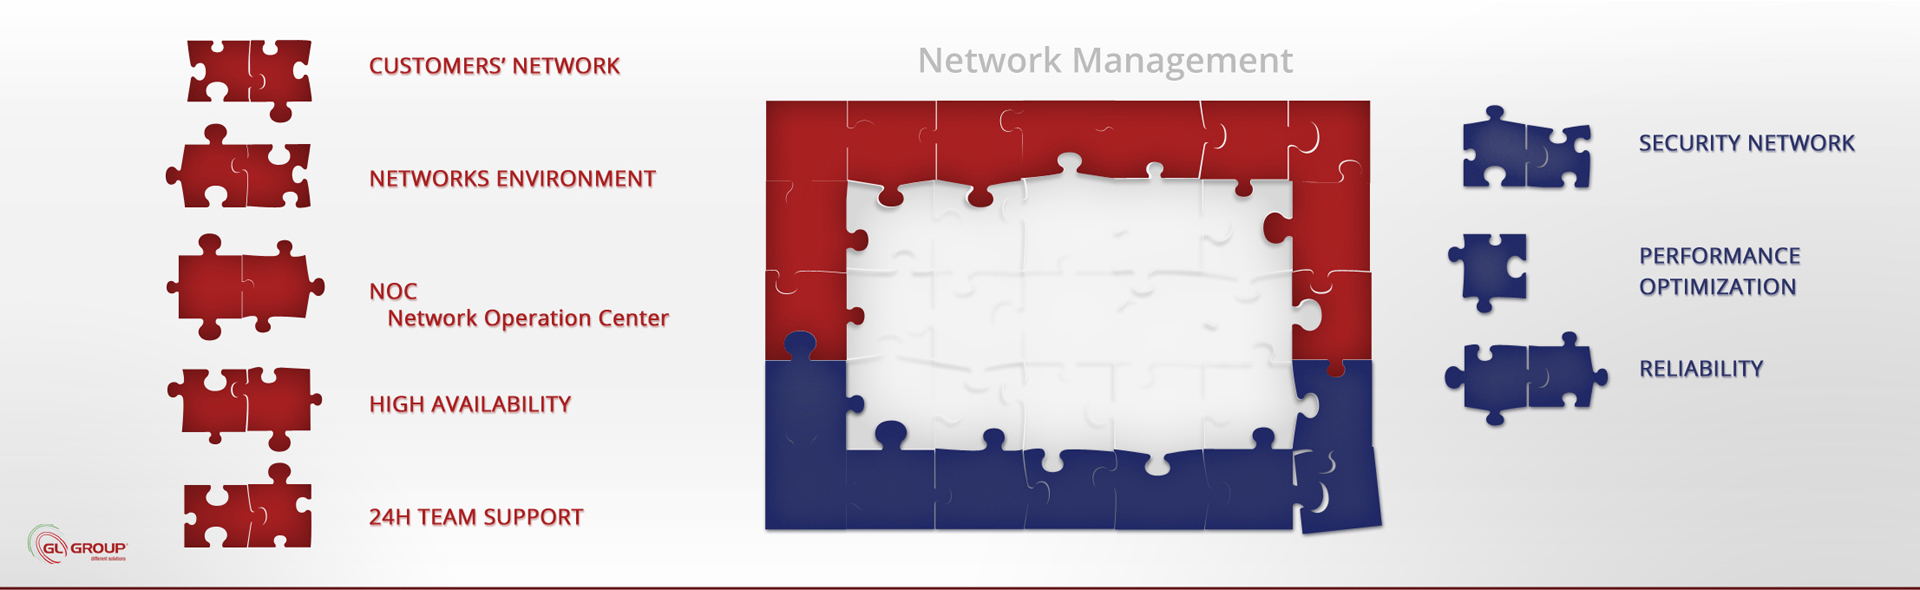 GL Group, Network Management